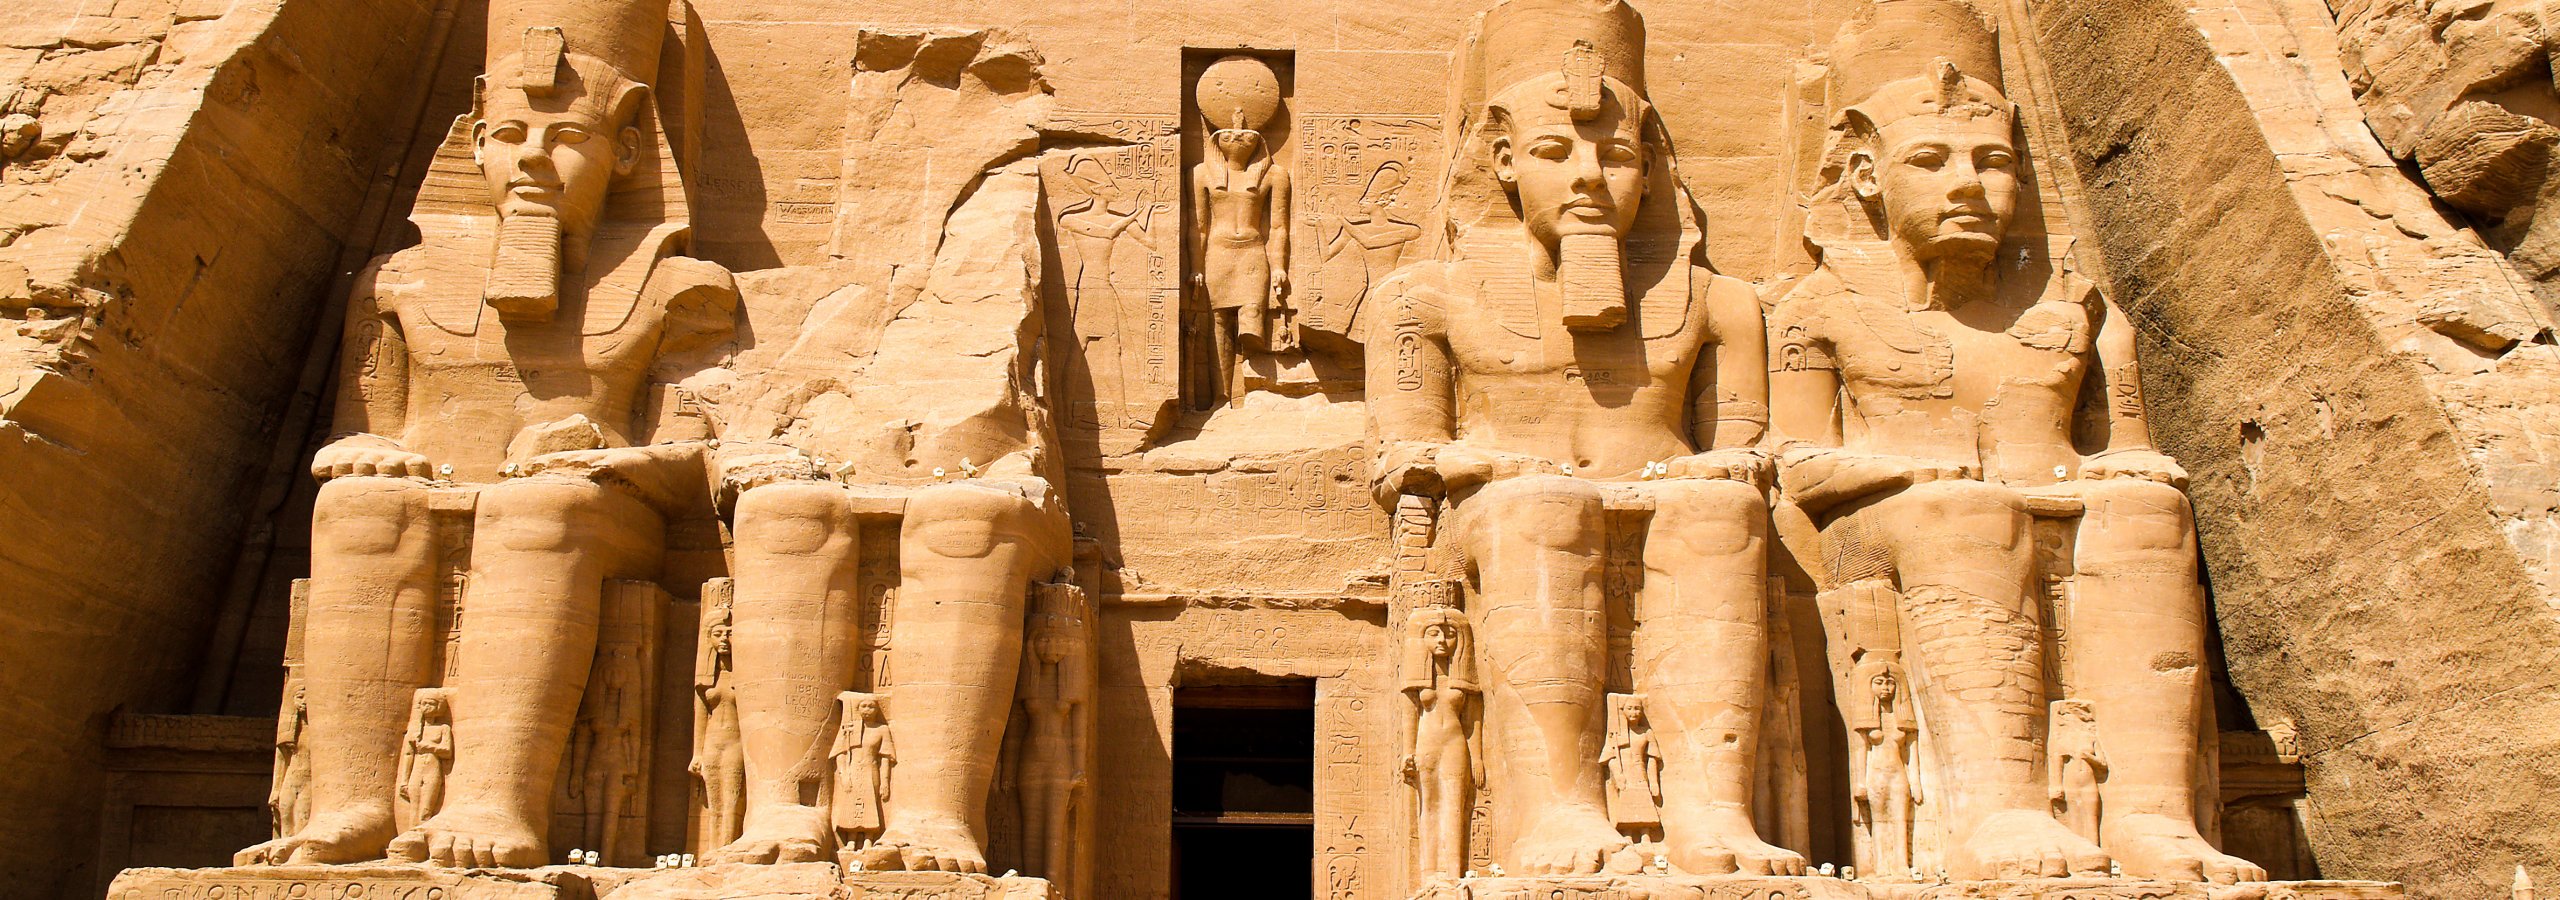 The Felstempel in Abu Simbel Egypt